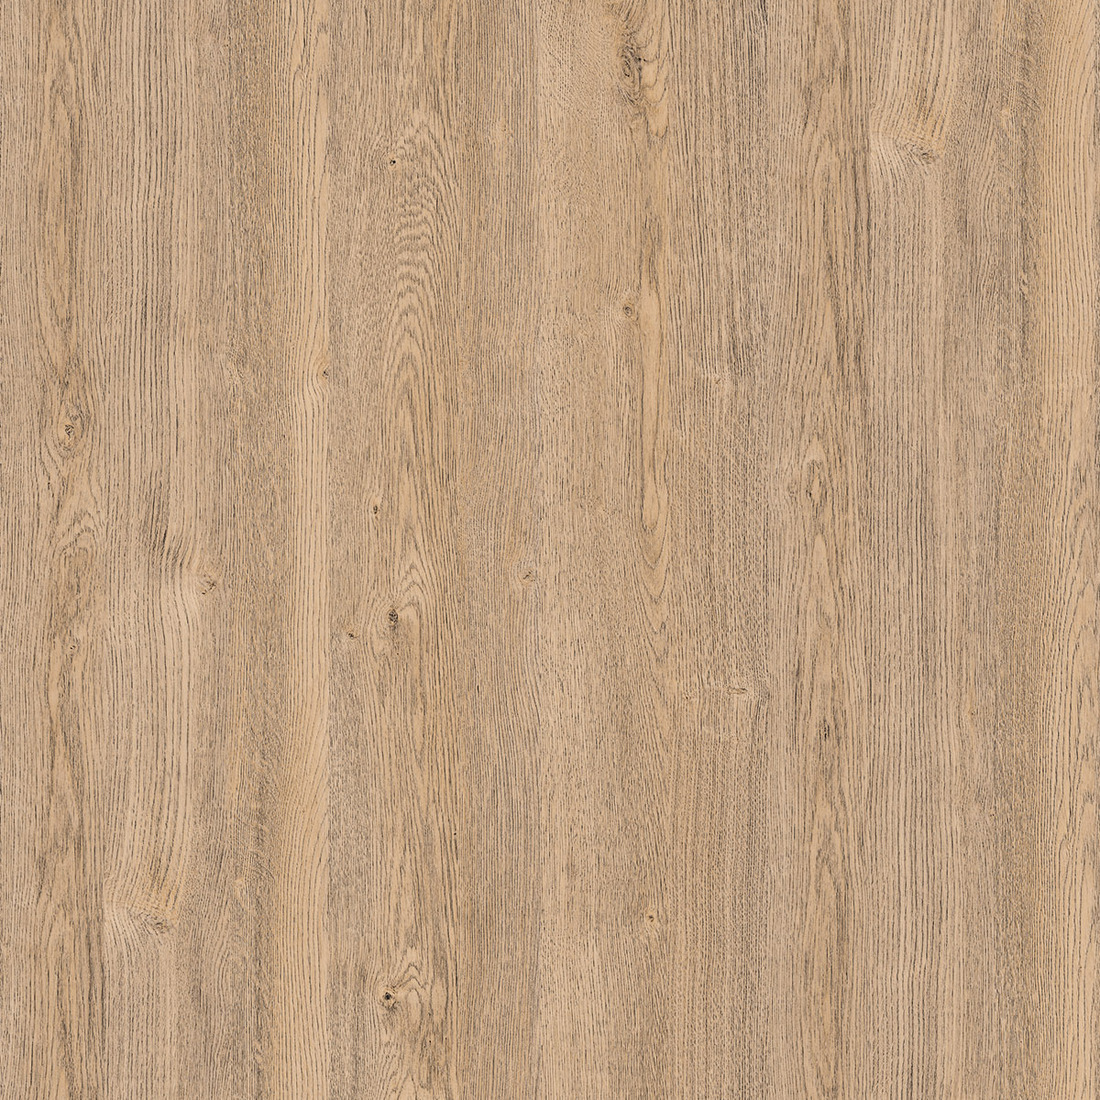 Sand Expressive Oak